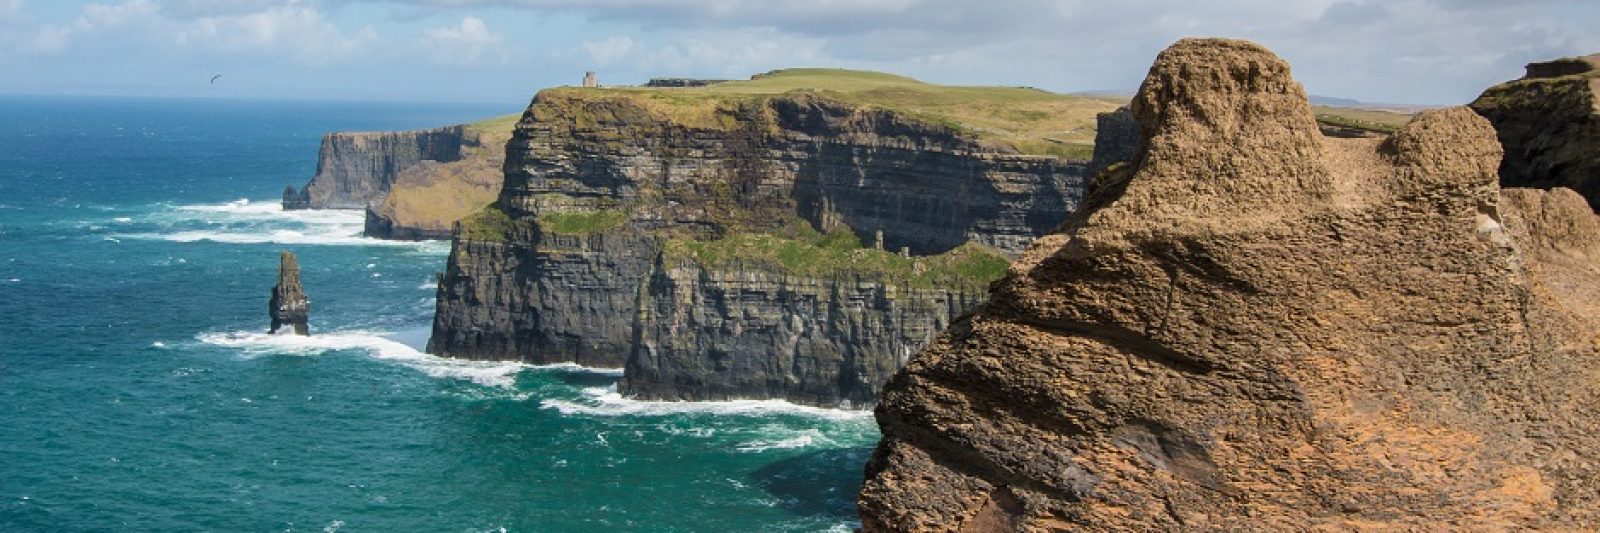 Cliffs of Moher (Aillte an Mhothair) Ireland